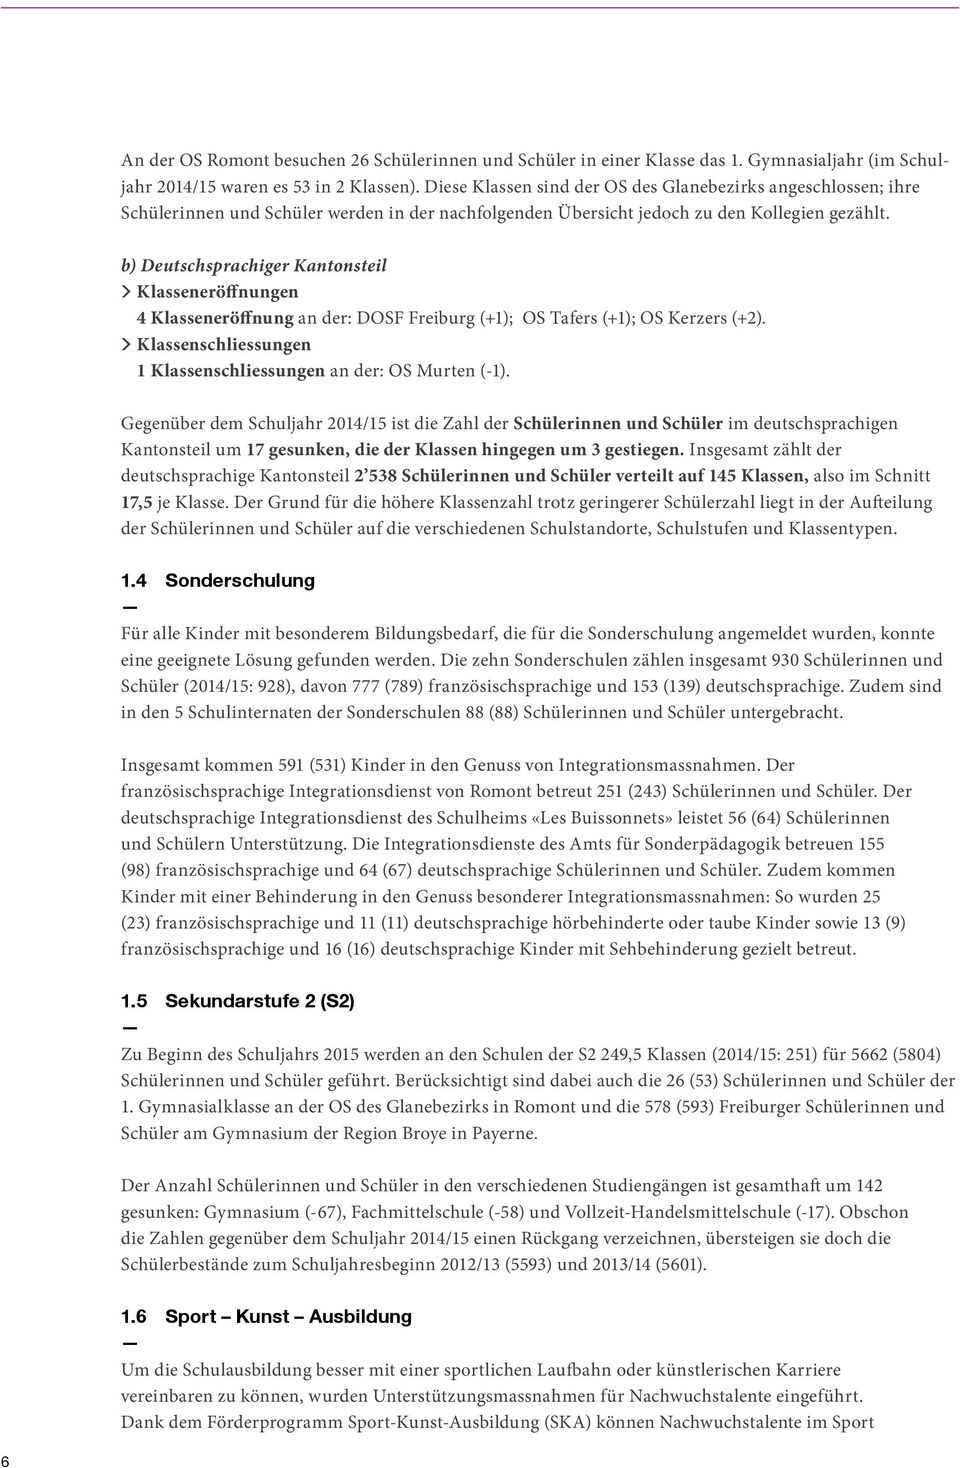 b) Deutschsprachiger Kantonsteil 4 Klasseneröffnung an der: DOSF Freiburg (+1); OS Tafers (+1); OS Kerzers (+2). 1 Klassenschliessungen an der: OS Murten (-1).